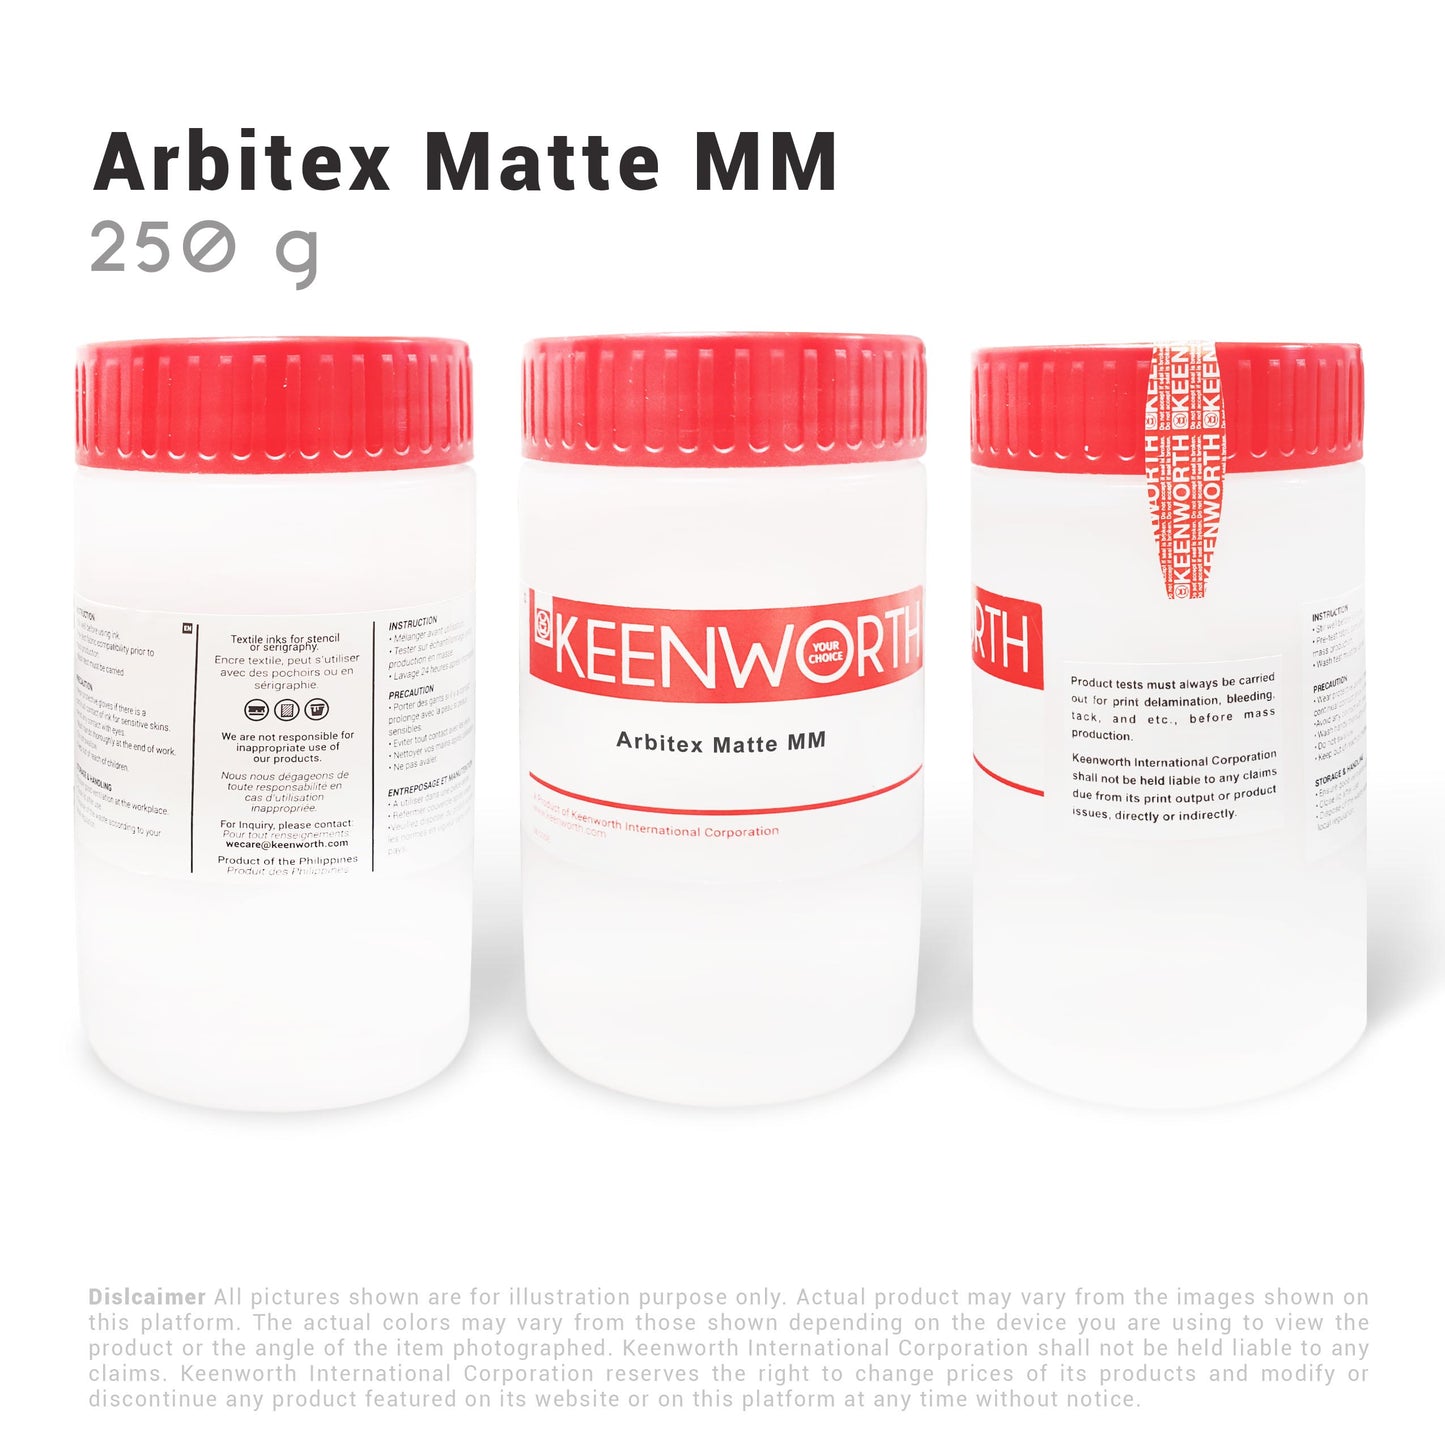 Arbitex Matte MM